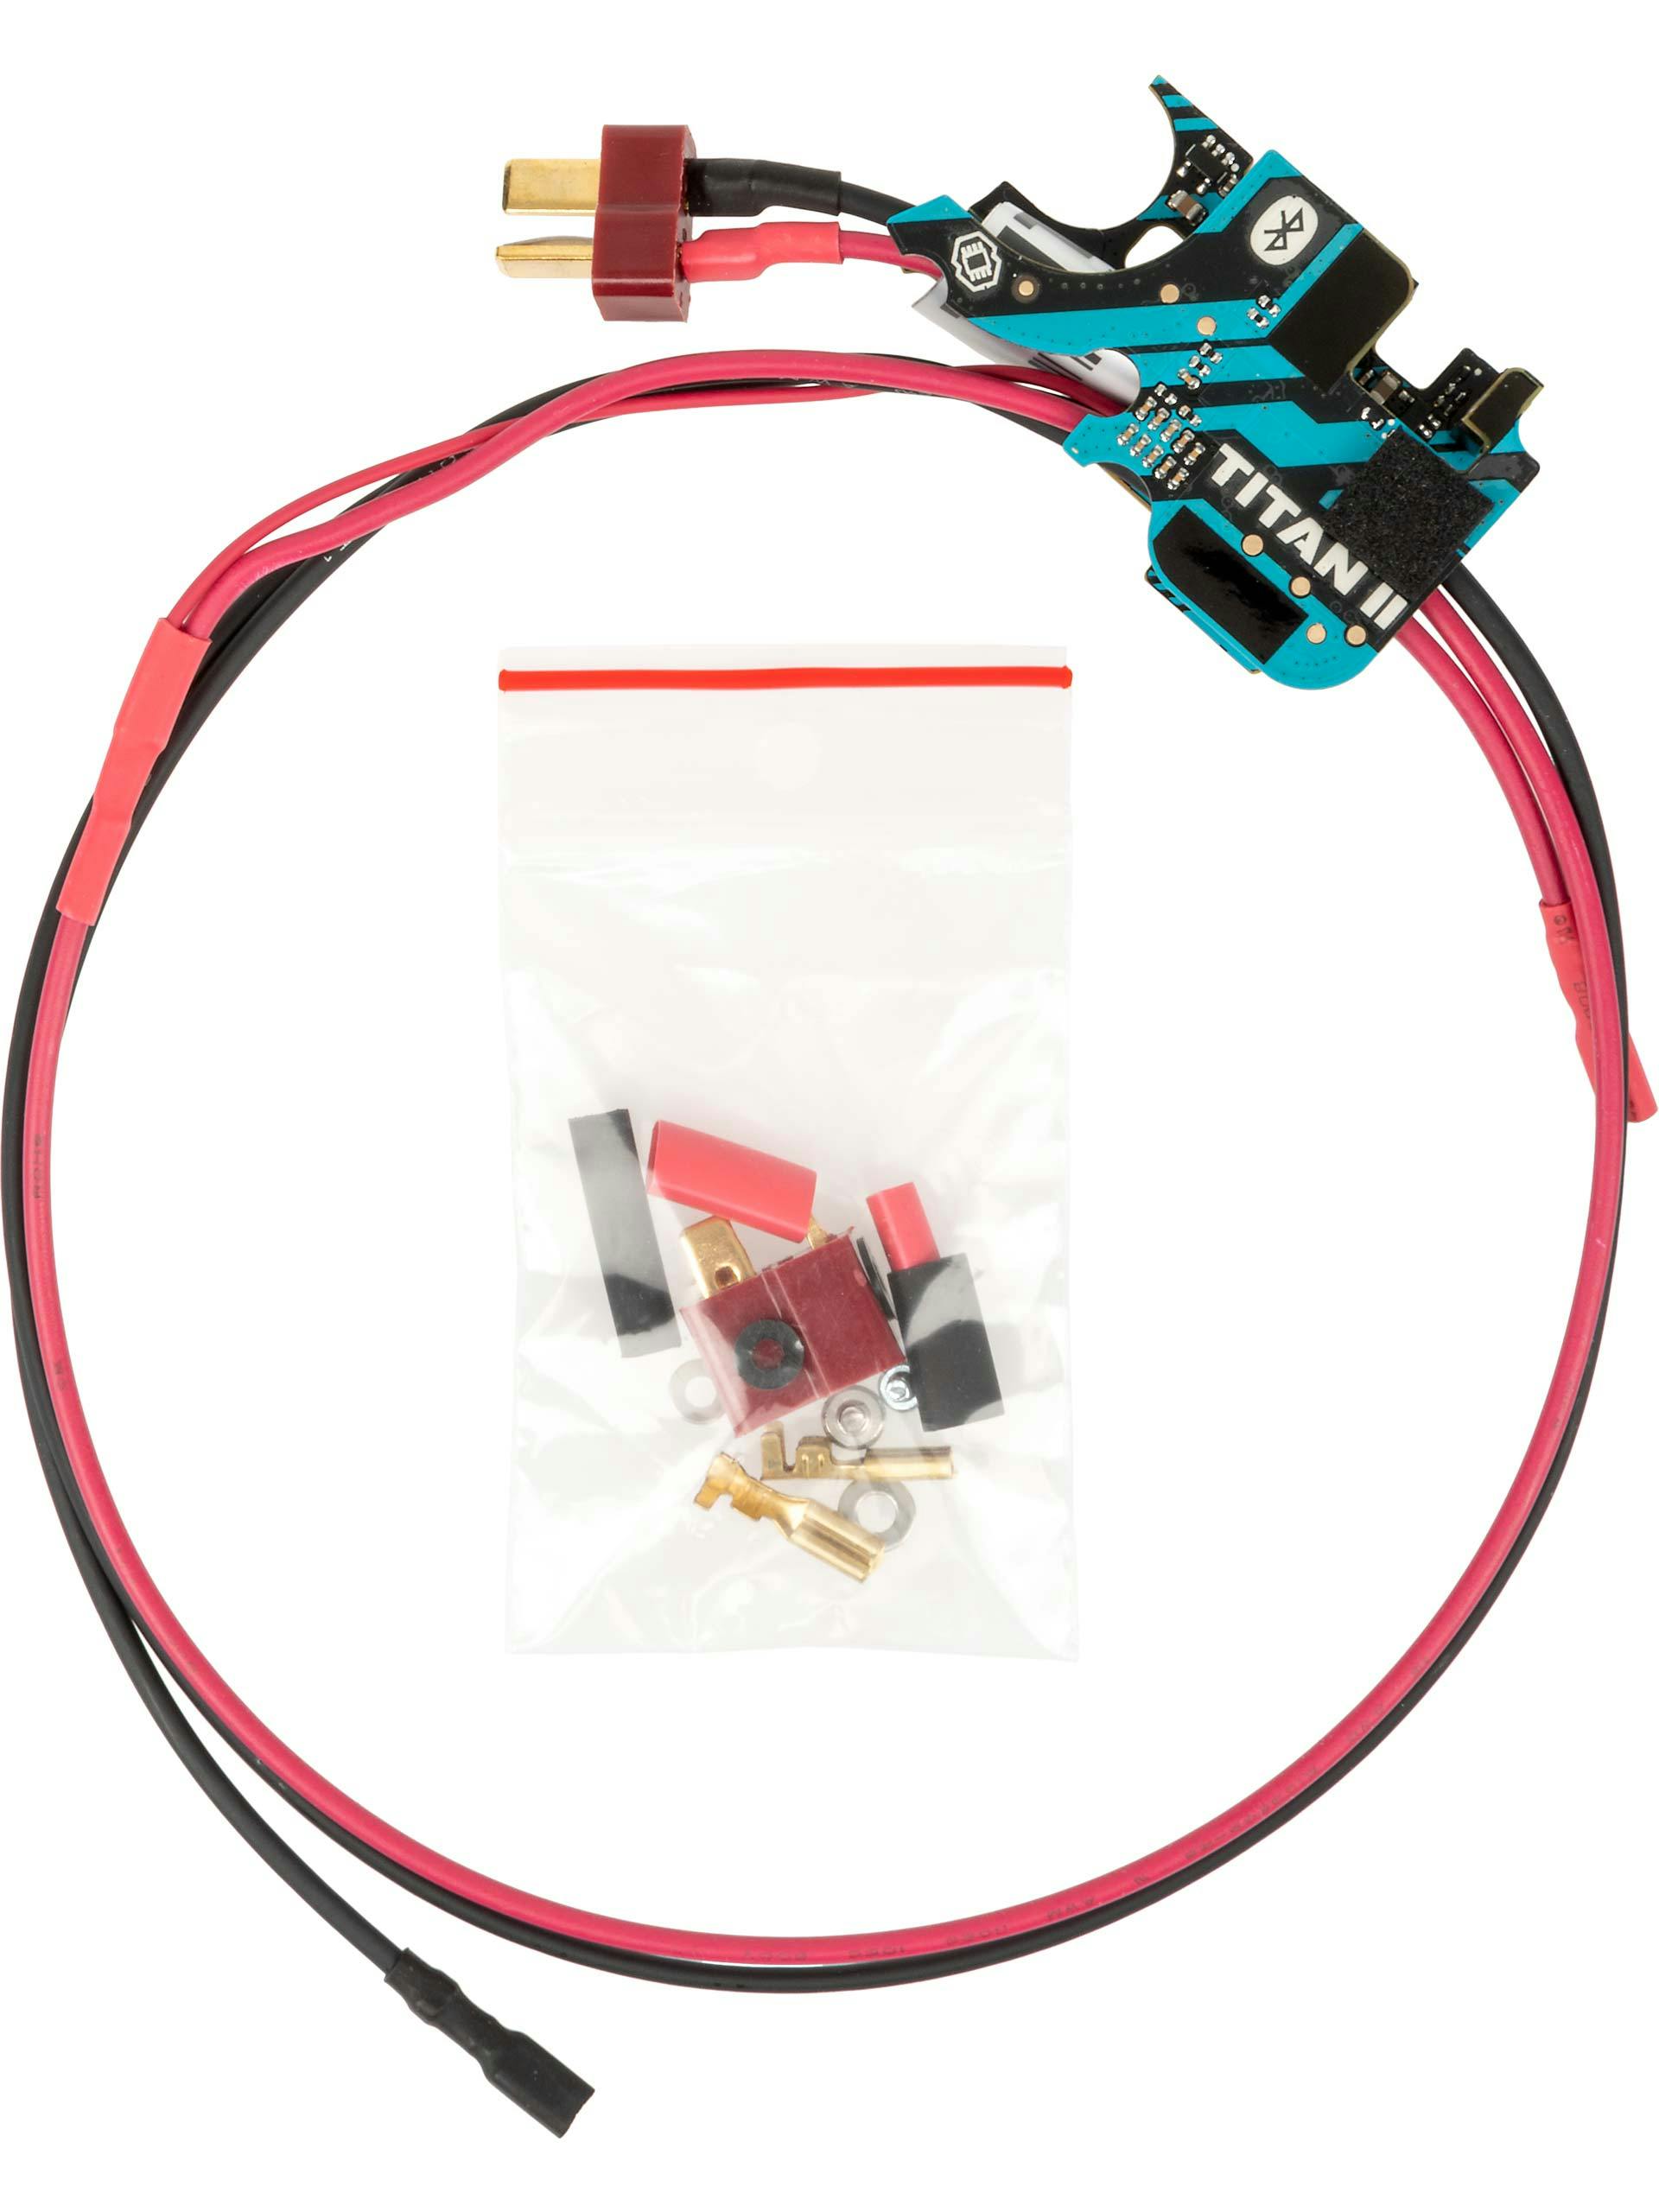 Gate - TITAN II Bluetooth MOSFET ETU for V2 Rear Wired; Basic Firmware